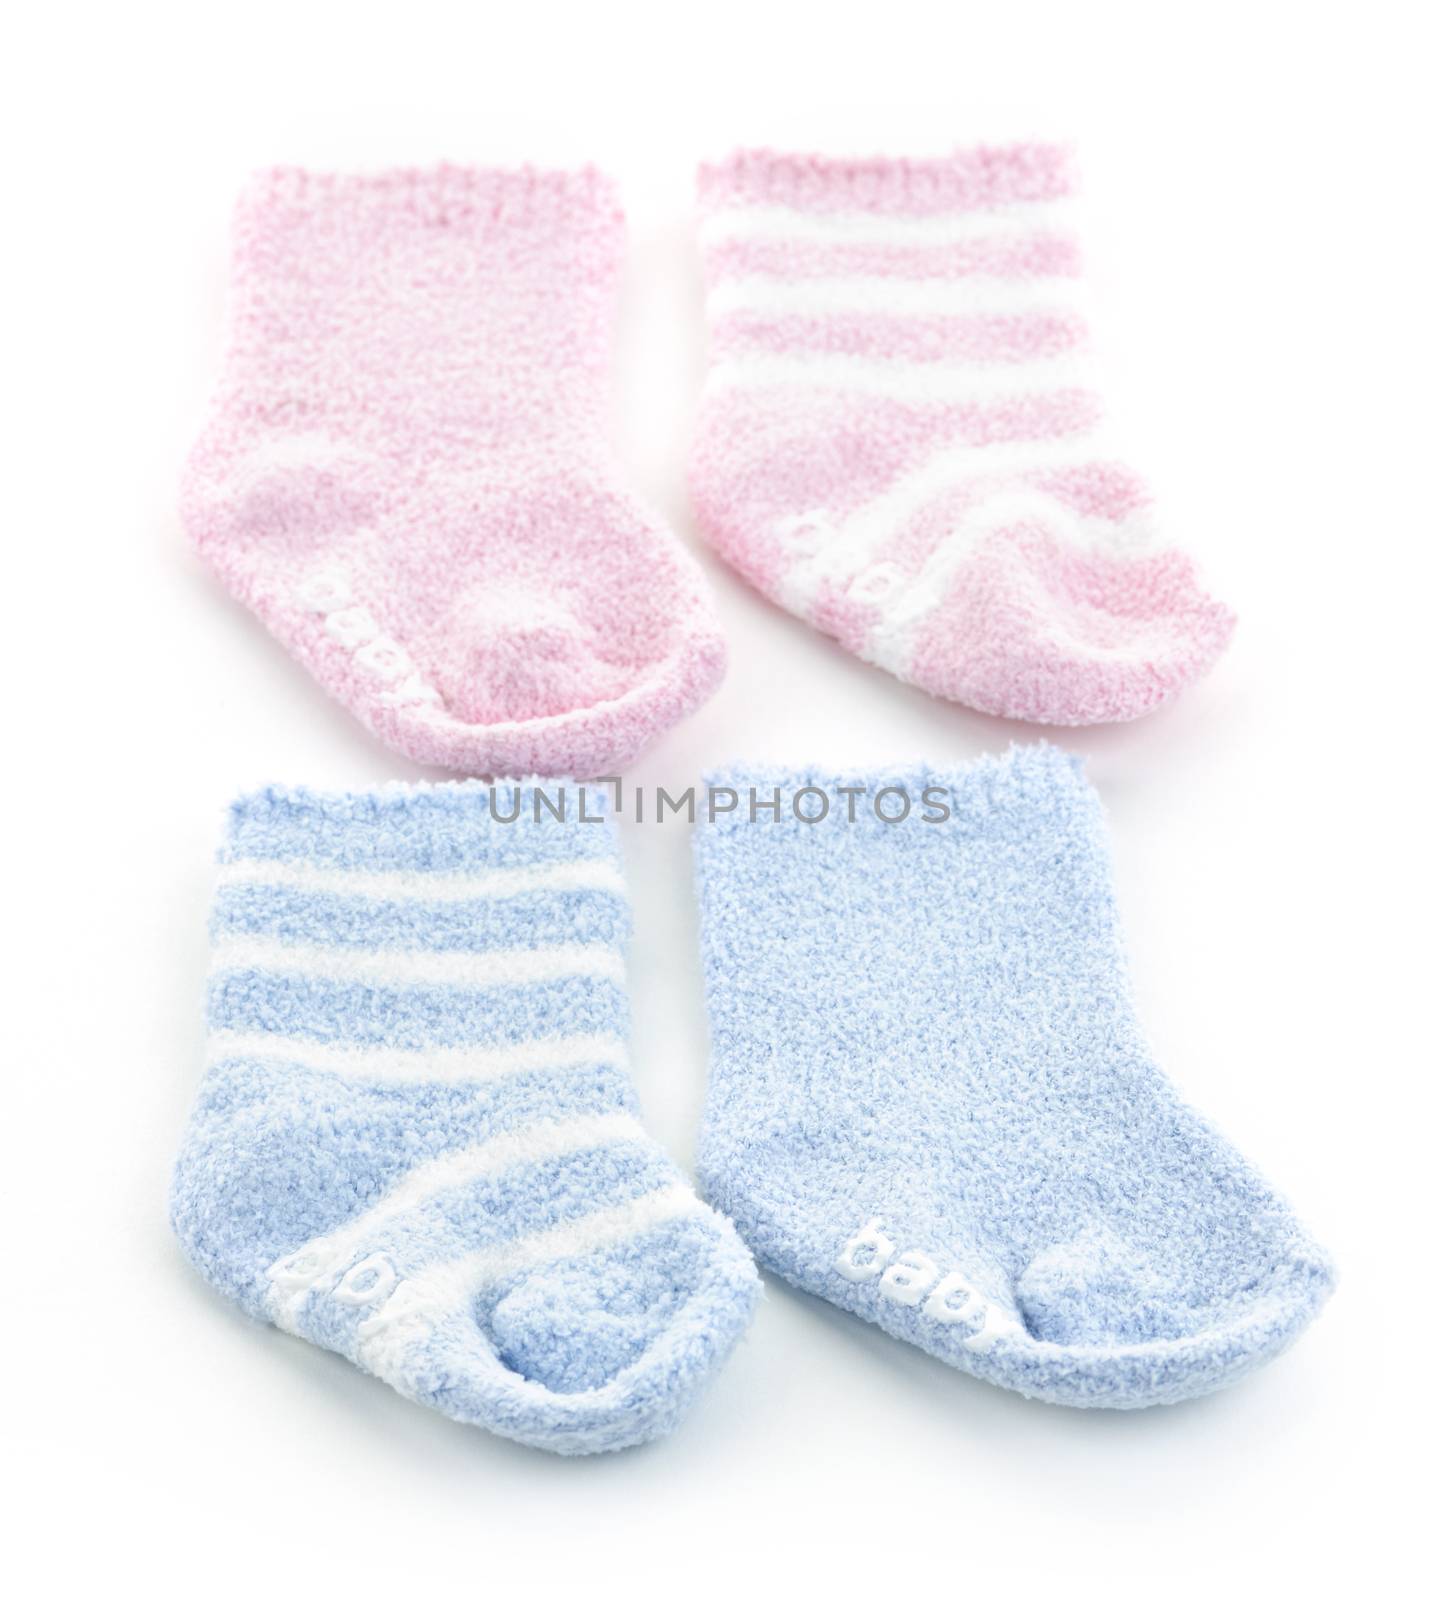 Baby socks by elenathewise